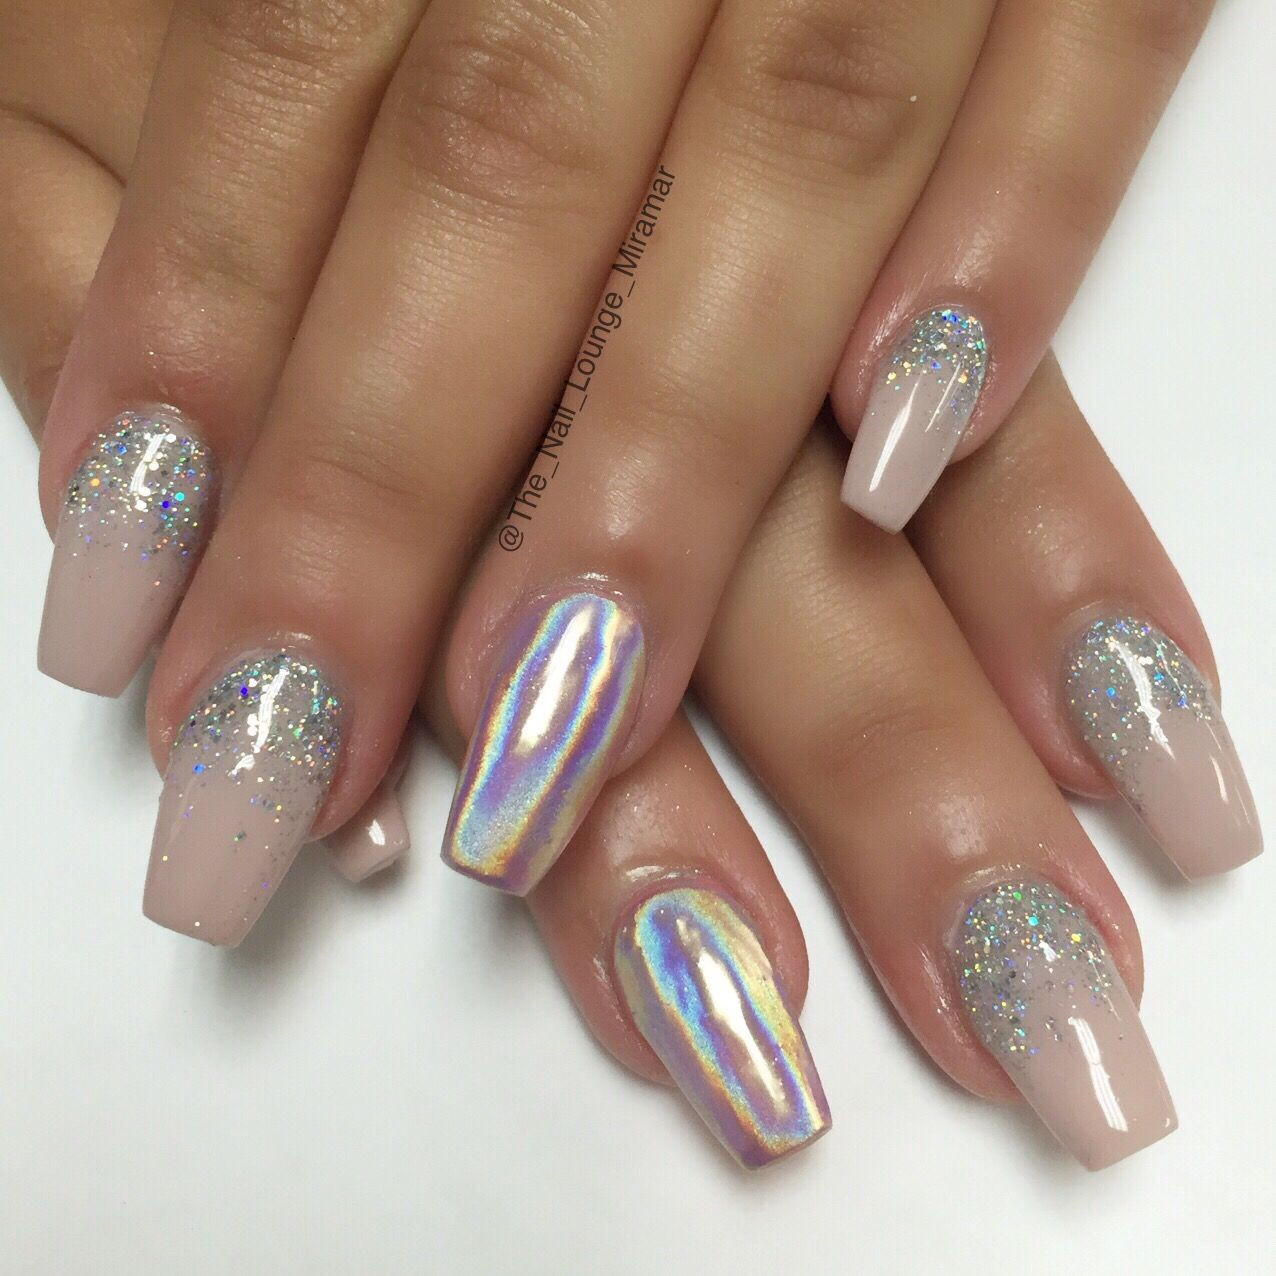 Chrome And Glitter Nails
 Holographic chrome glitter ombré nail art design